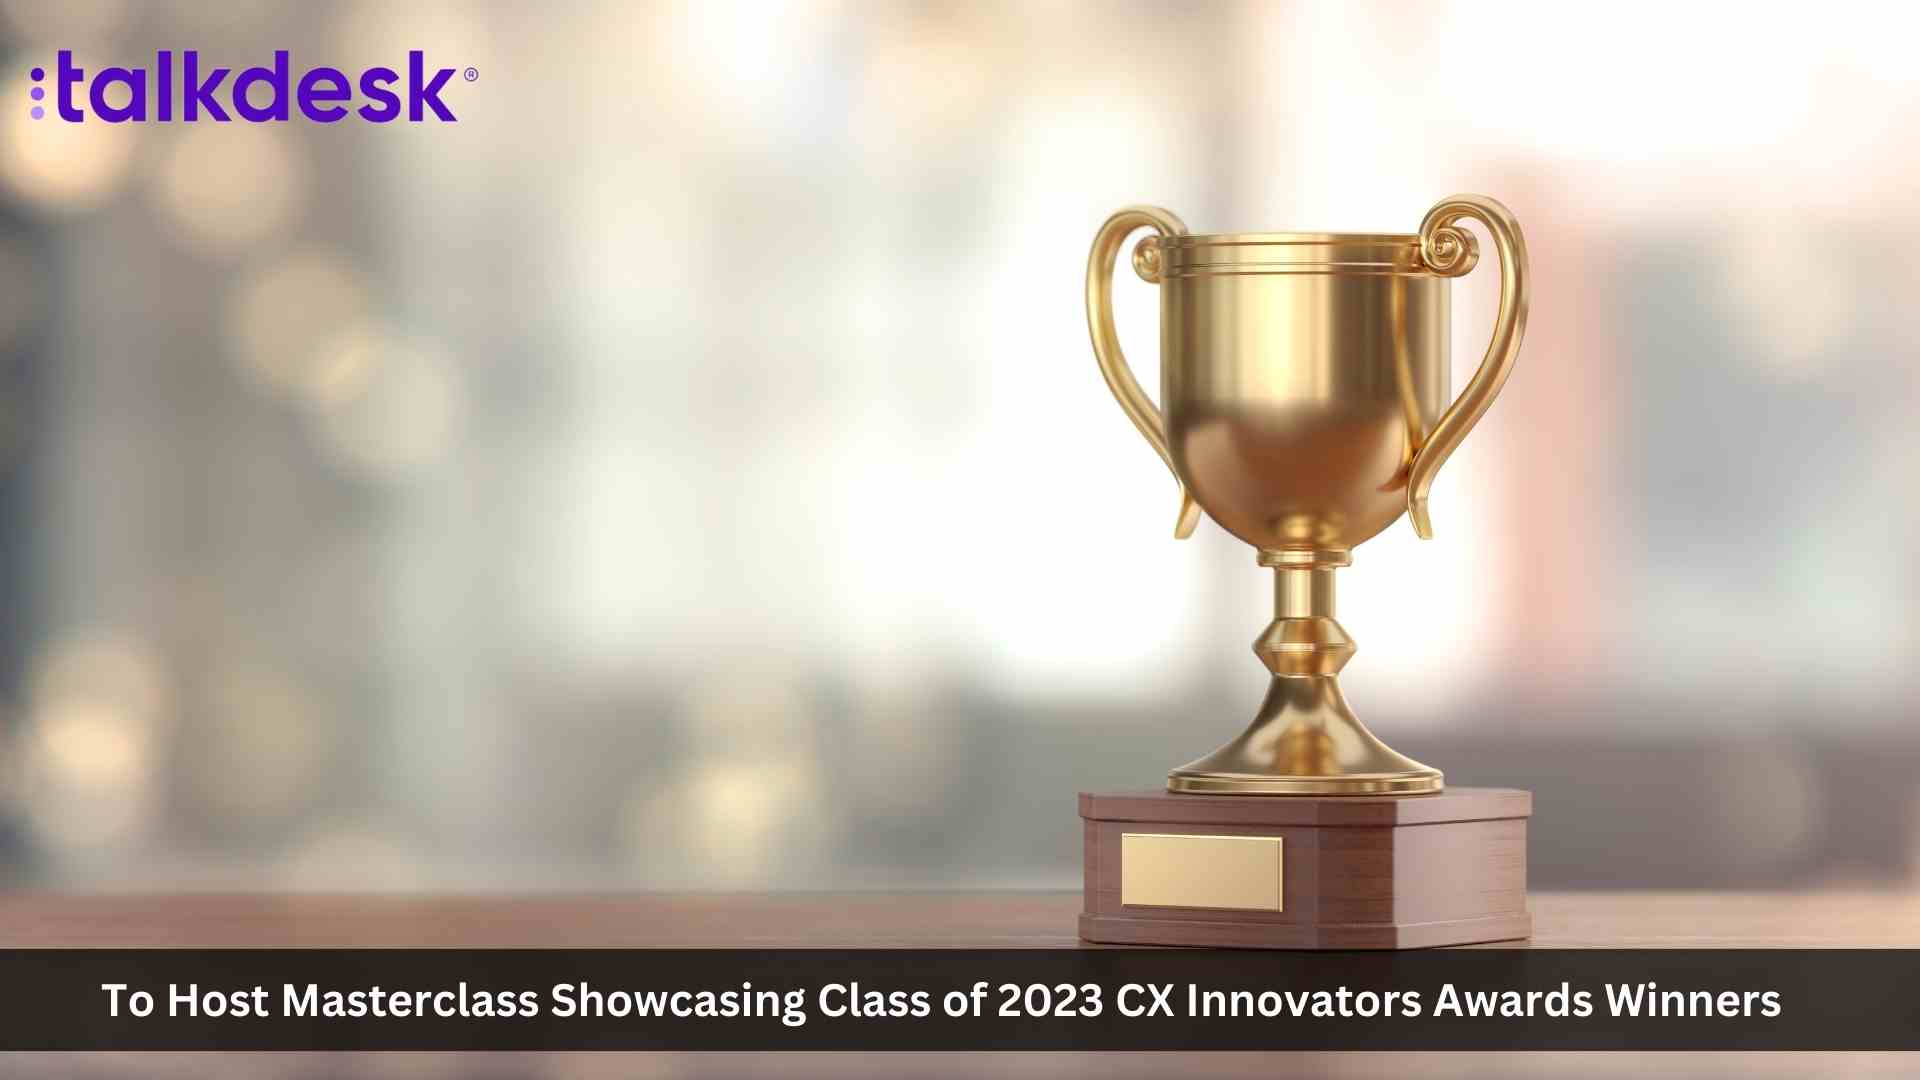 Talkdesk to Host Masterclass Showcasing Class of 2023 CX Innovators Awards Winners